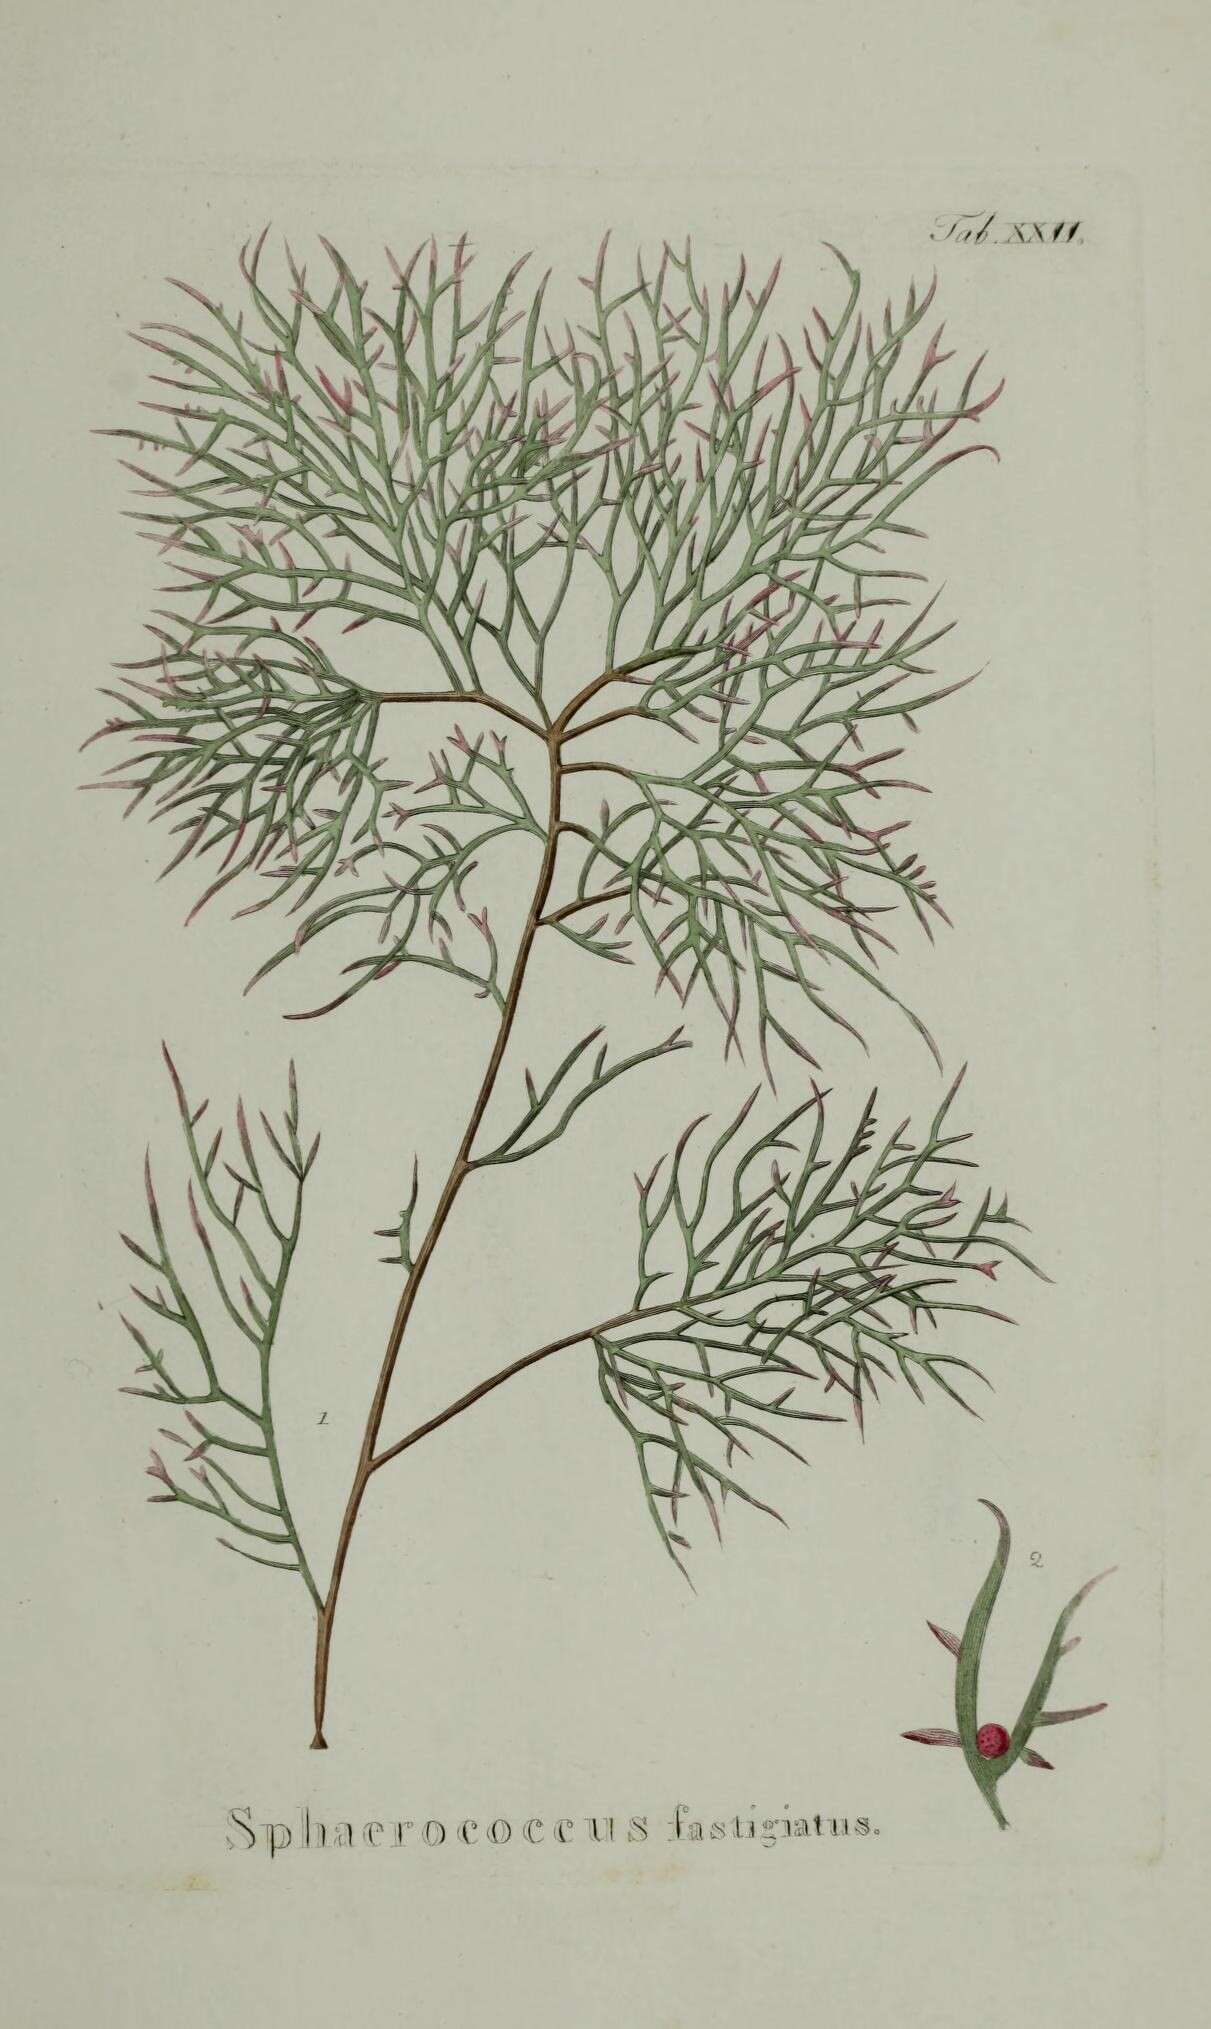 Image of Furcellaria